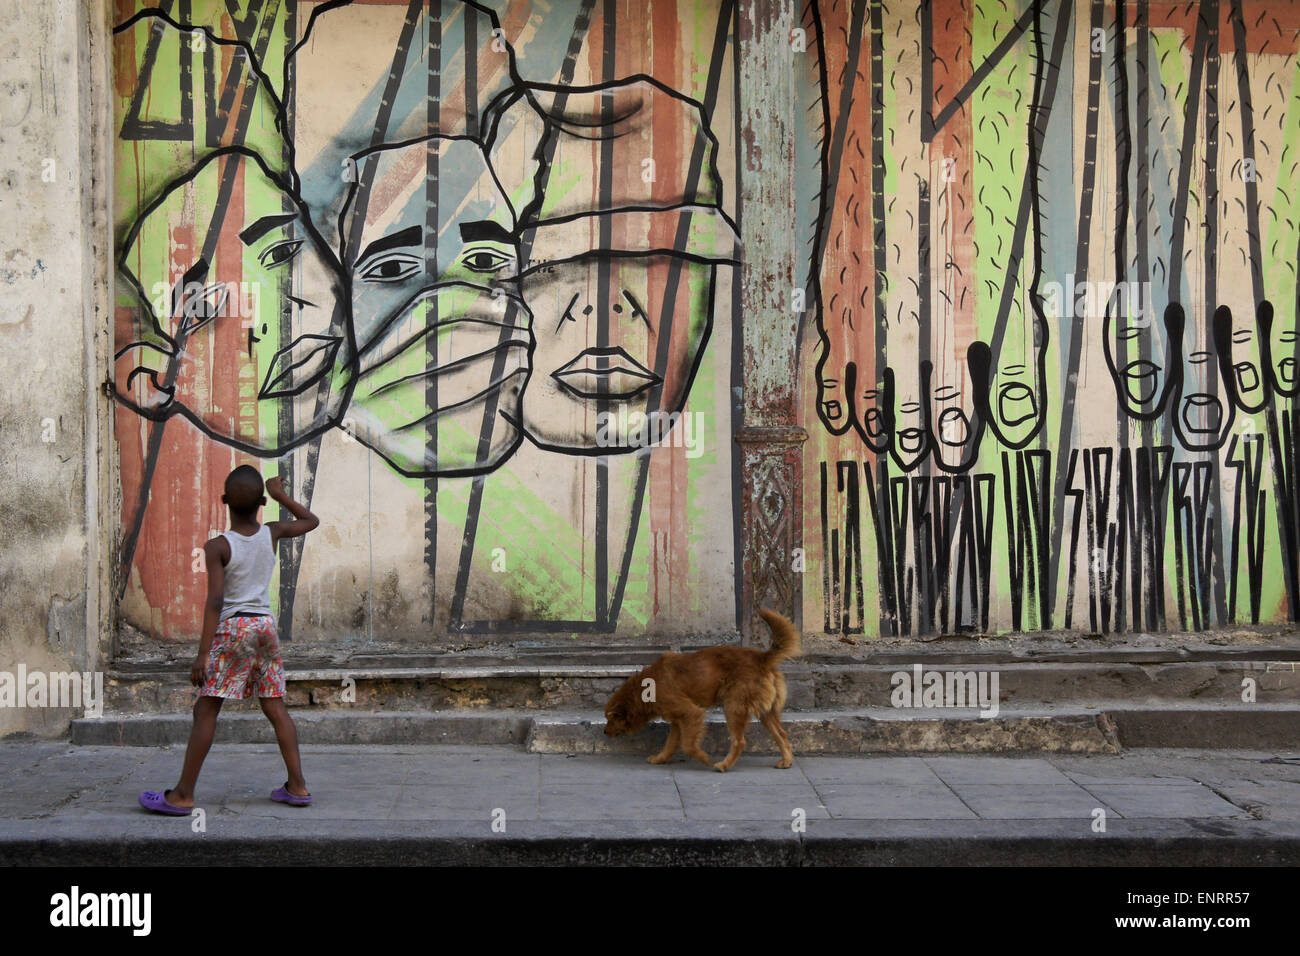 Boy, dog, and street mural, Havana, Cuba Stock Photo